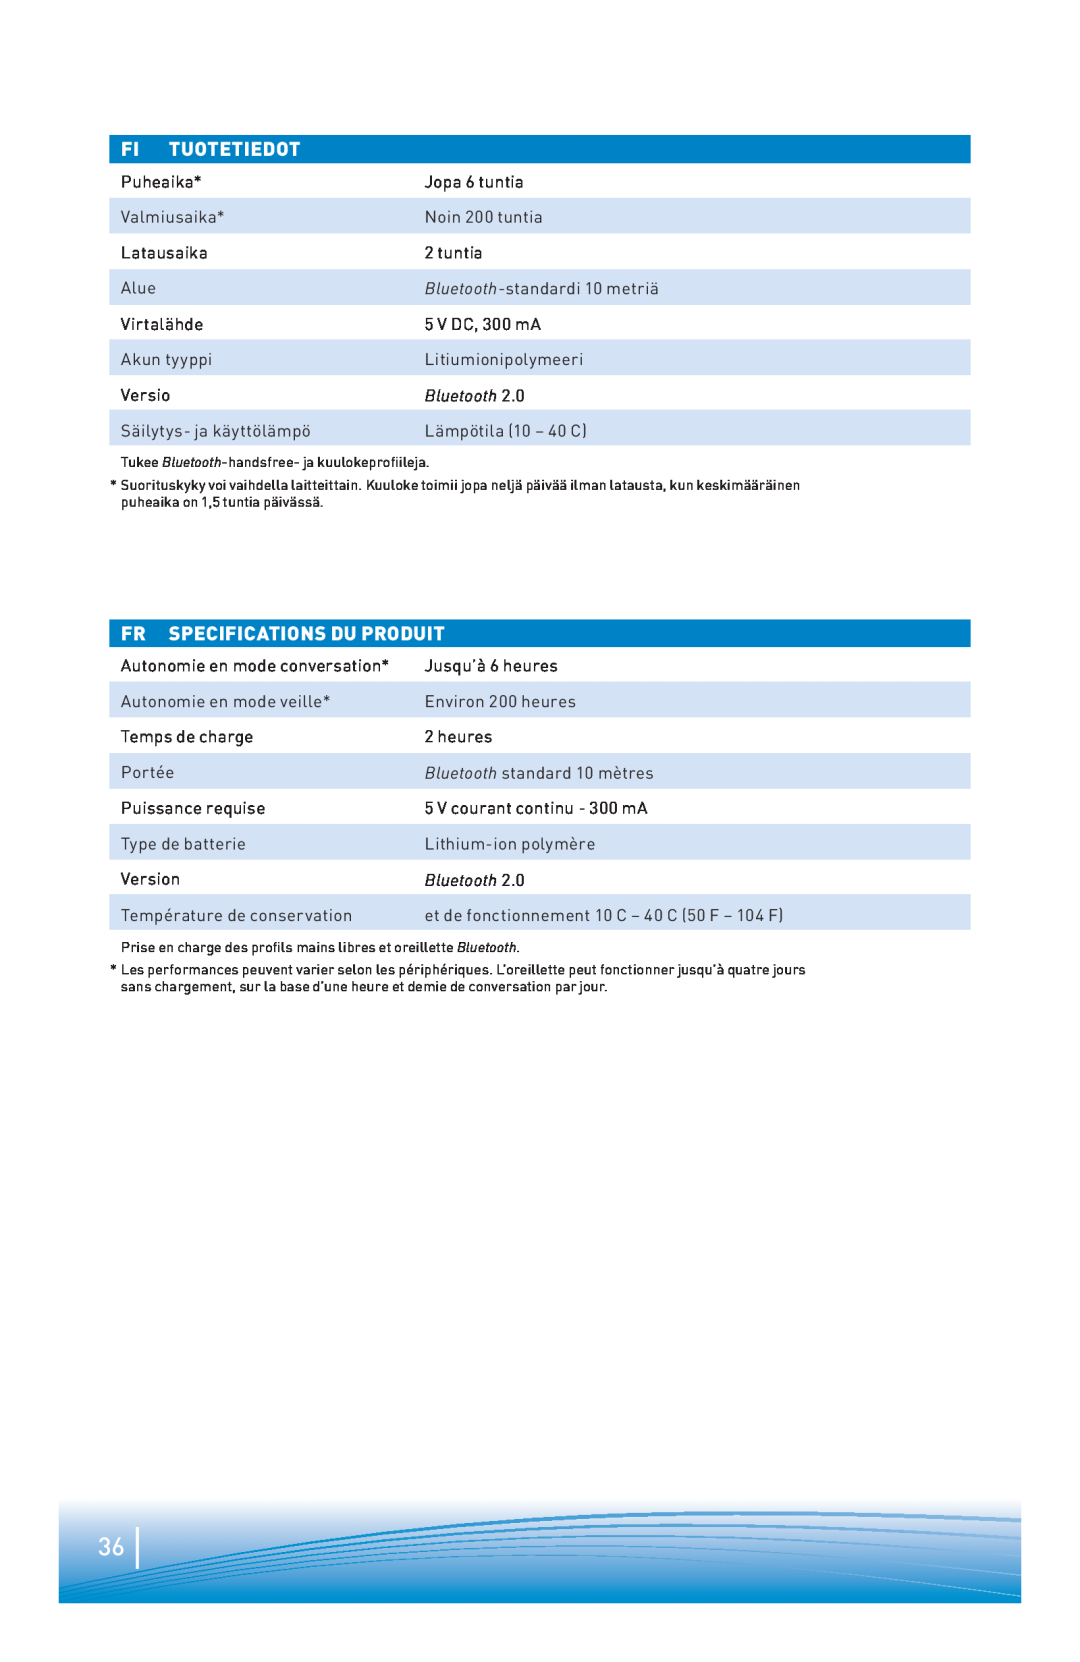 Plantronics 220 SERIES manual do utilizador Tuotetiedot, Fr Specifications Du Produit, Bluetooth 